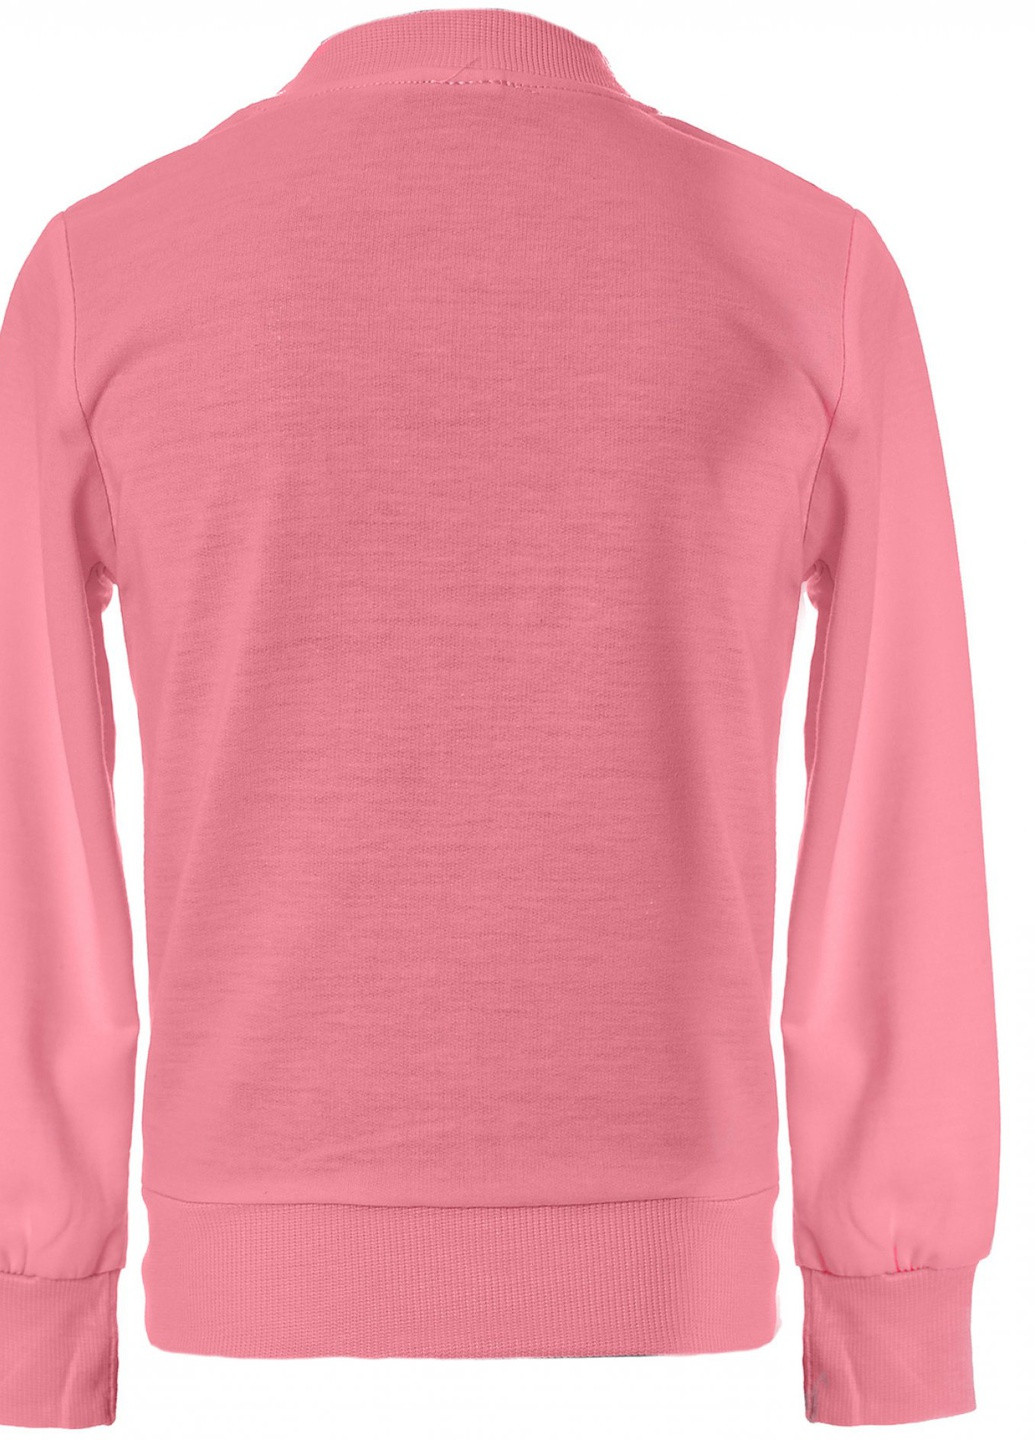 Розовая футболки батник на дівчаток (love)14580-709 Lemanta